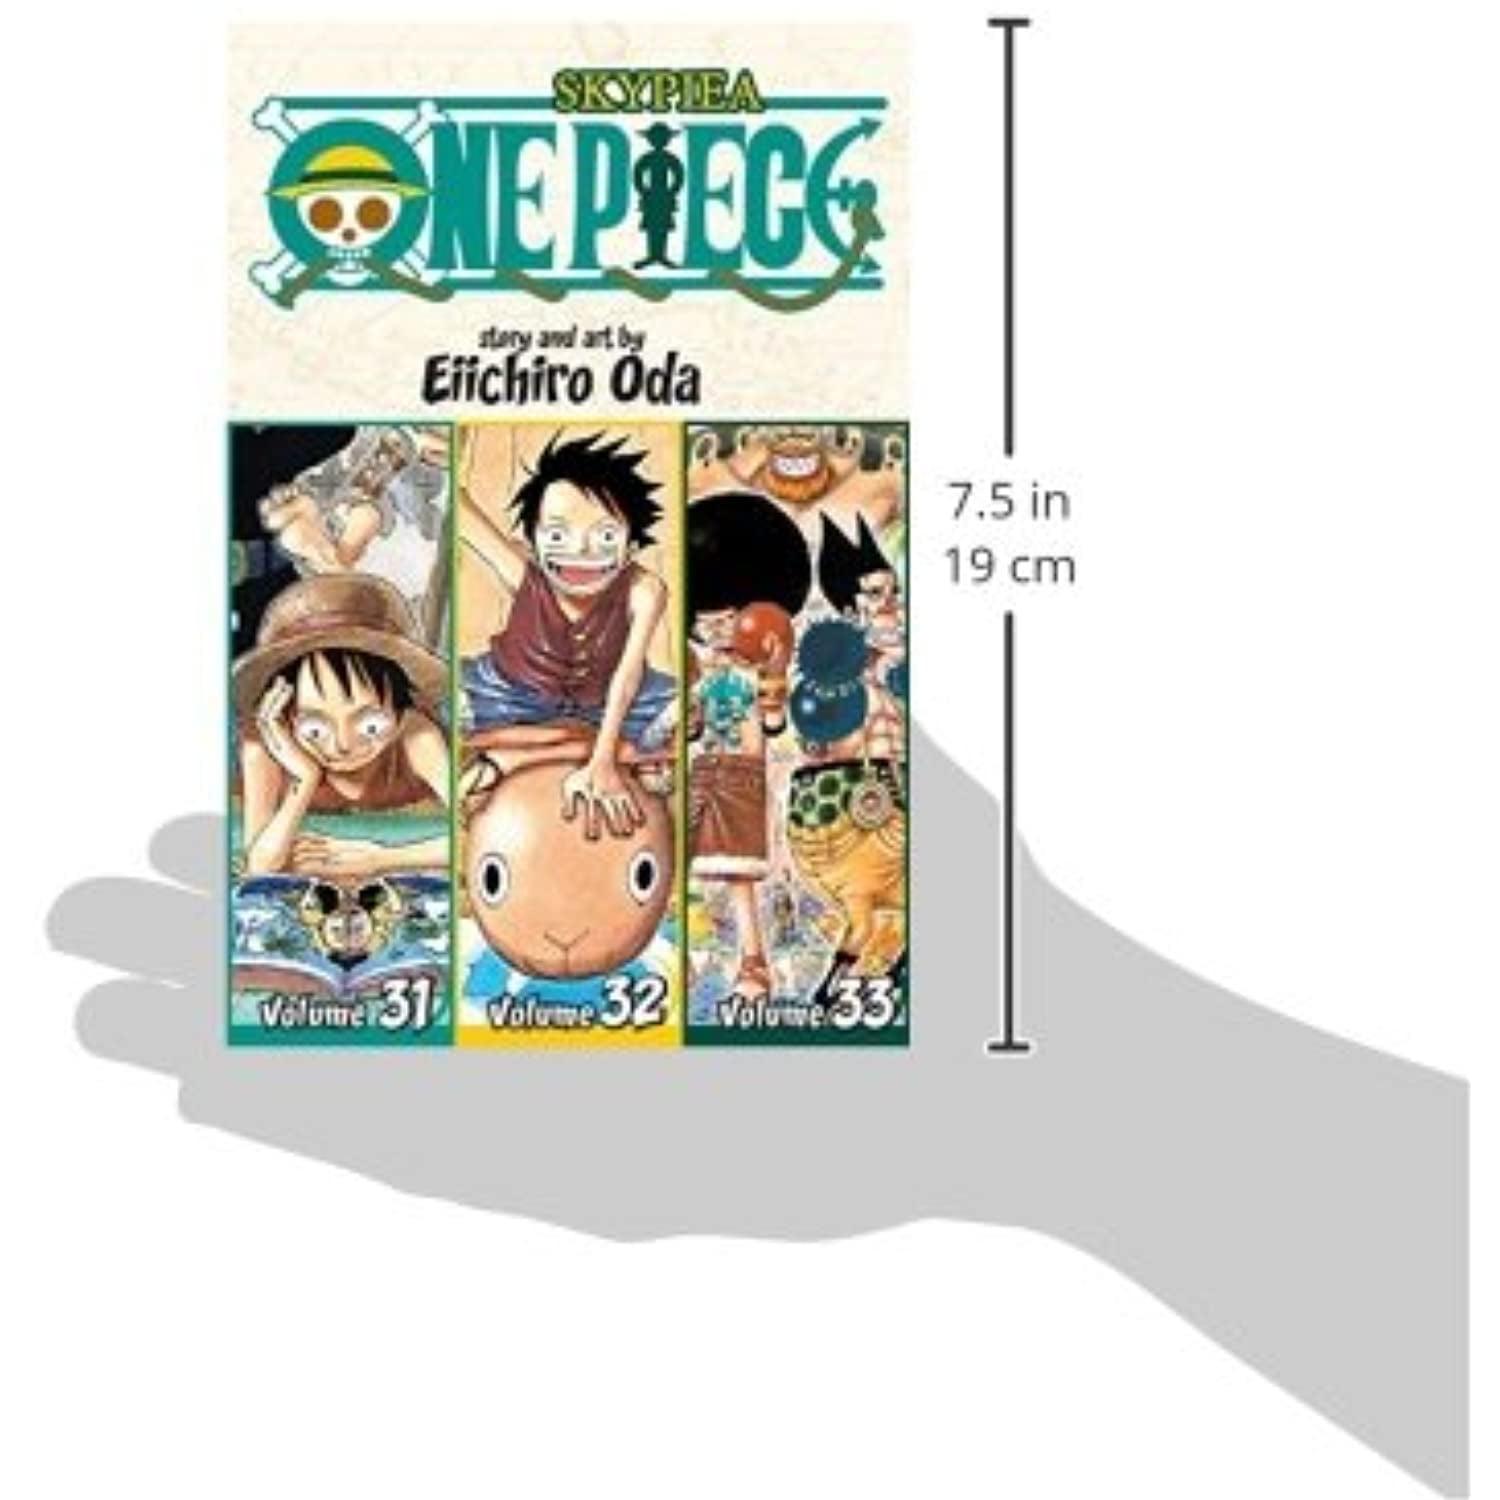 One Piece (3-in-1 Edition), Vol. 25: Includes vols. 73, 74 & 75 (One Piece  (Omnibus Edition)) [Idioma Inglés] : Oda, Eiichiro, Oda, Eiichiro:  : Libros